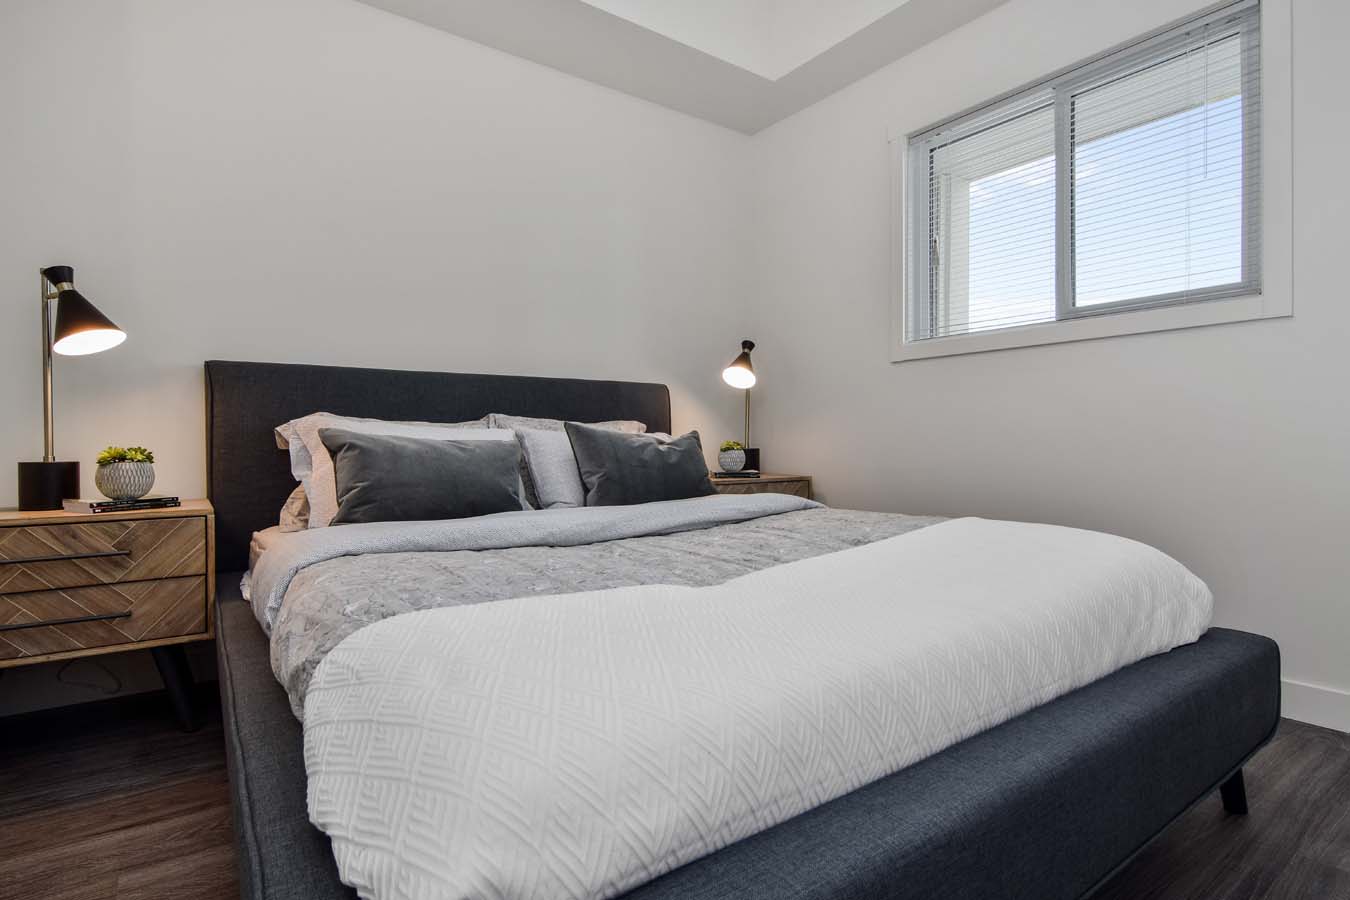 1 2 Bedroom Apartments For Rent West Kelowna Bc